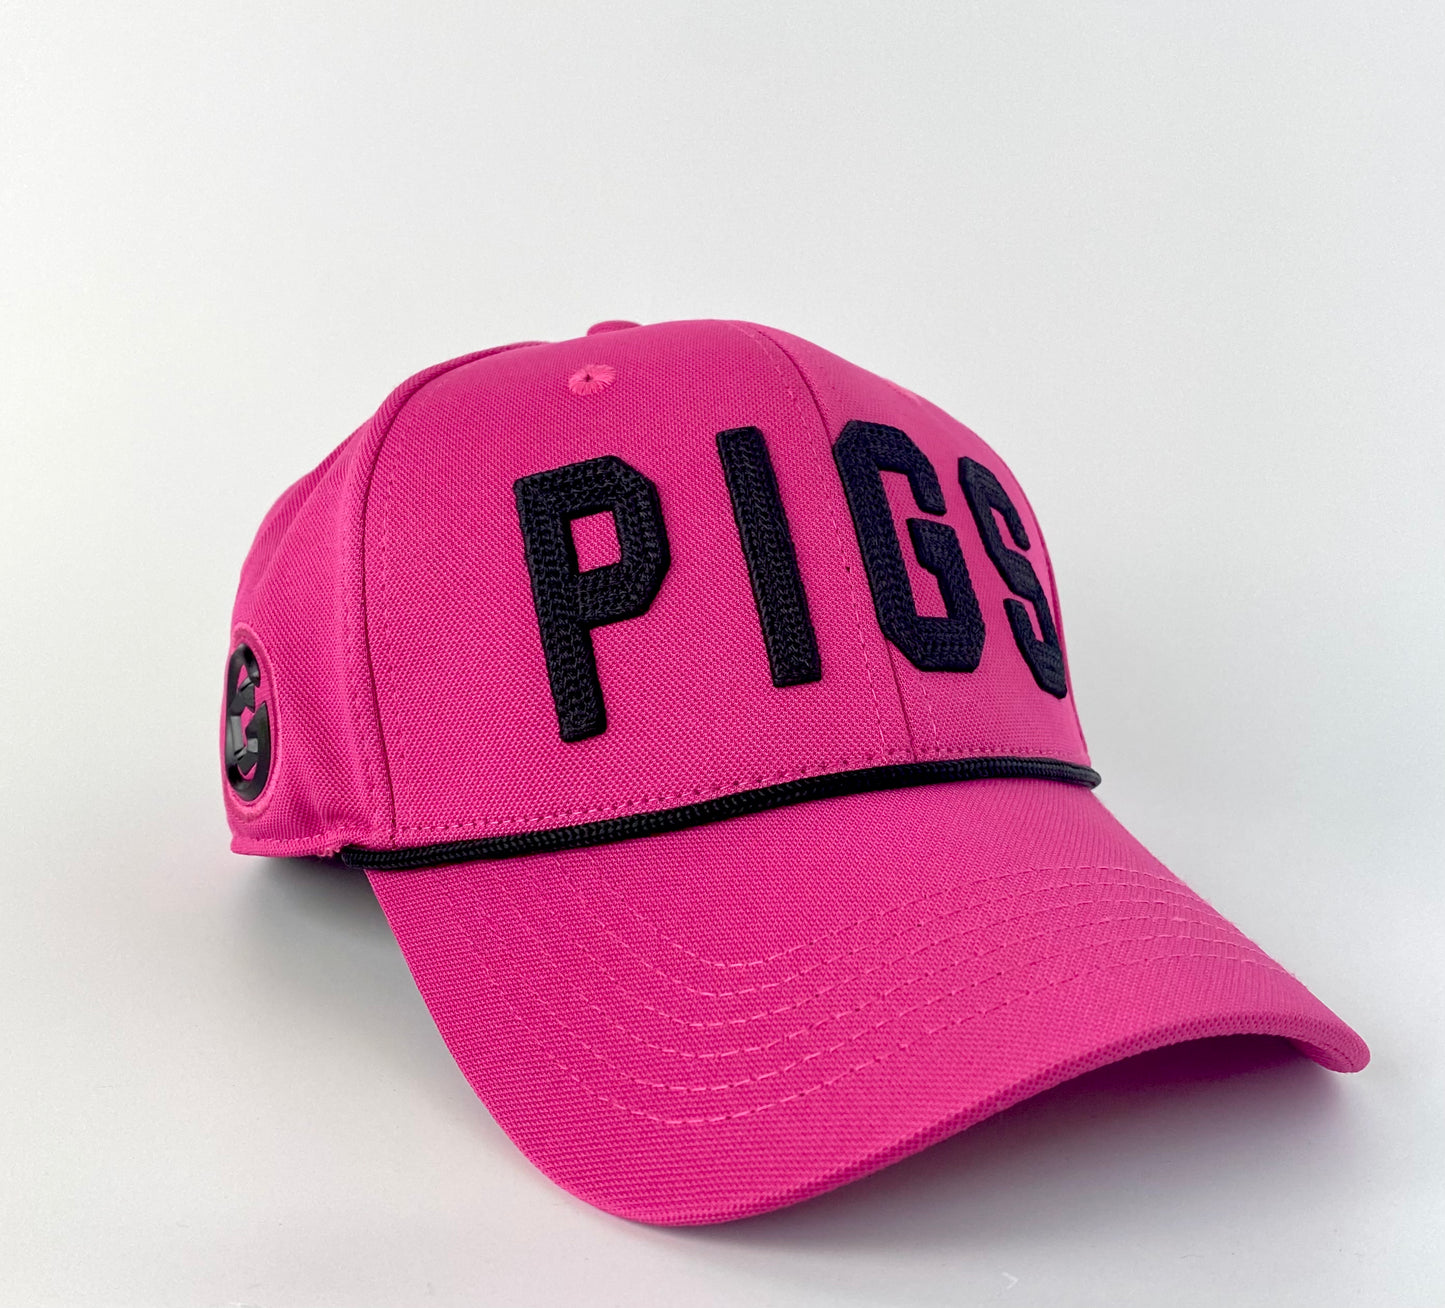 "OG" PIGS -Bubblegum with Black - Snapback - Curved Bill